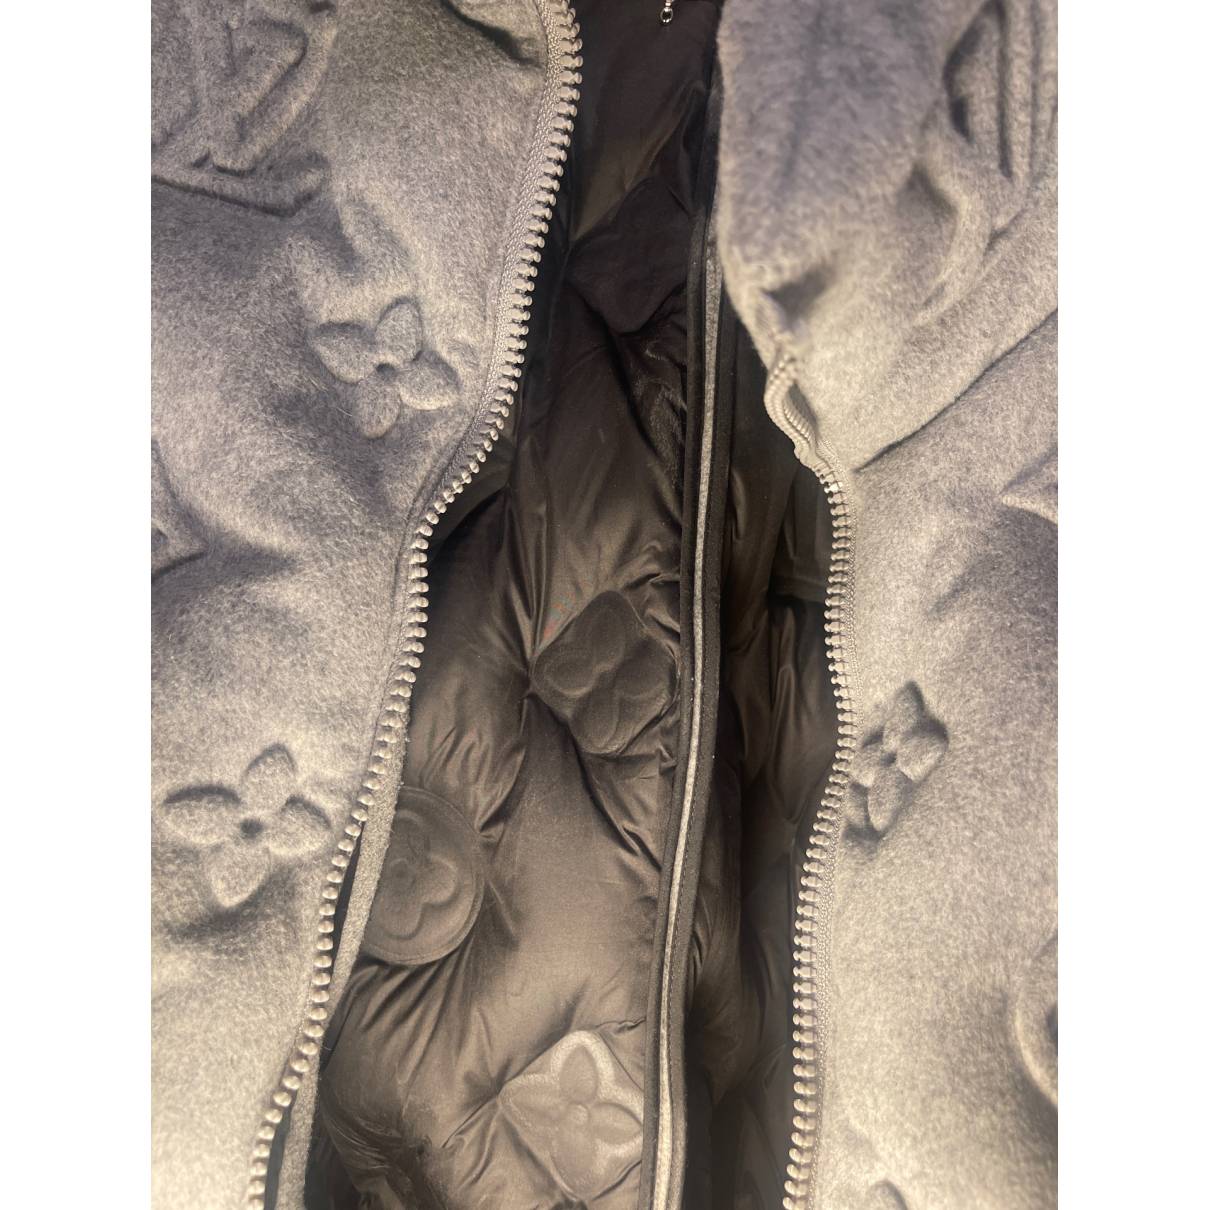 Huncho Store on Instagram: Louis Vuitton Grey Monogram BoyHood